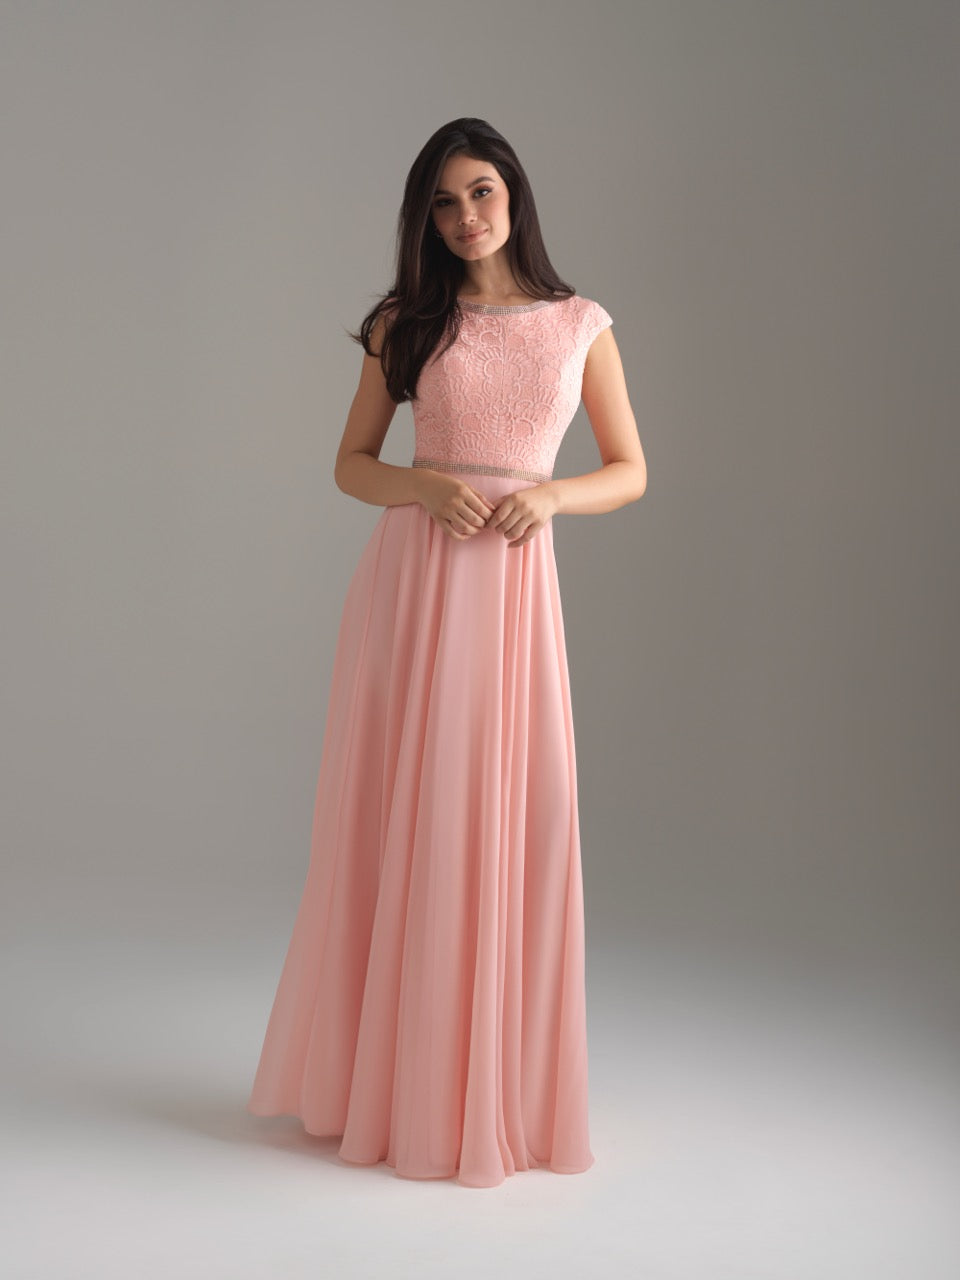 Allure 18802 Modest Prom Dress A Closet Full of Dresses